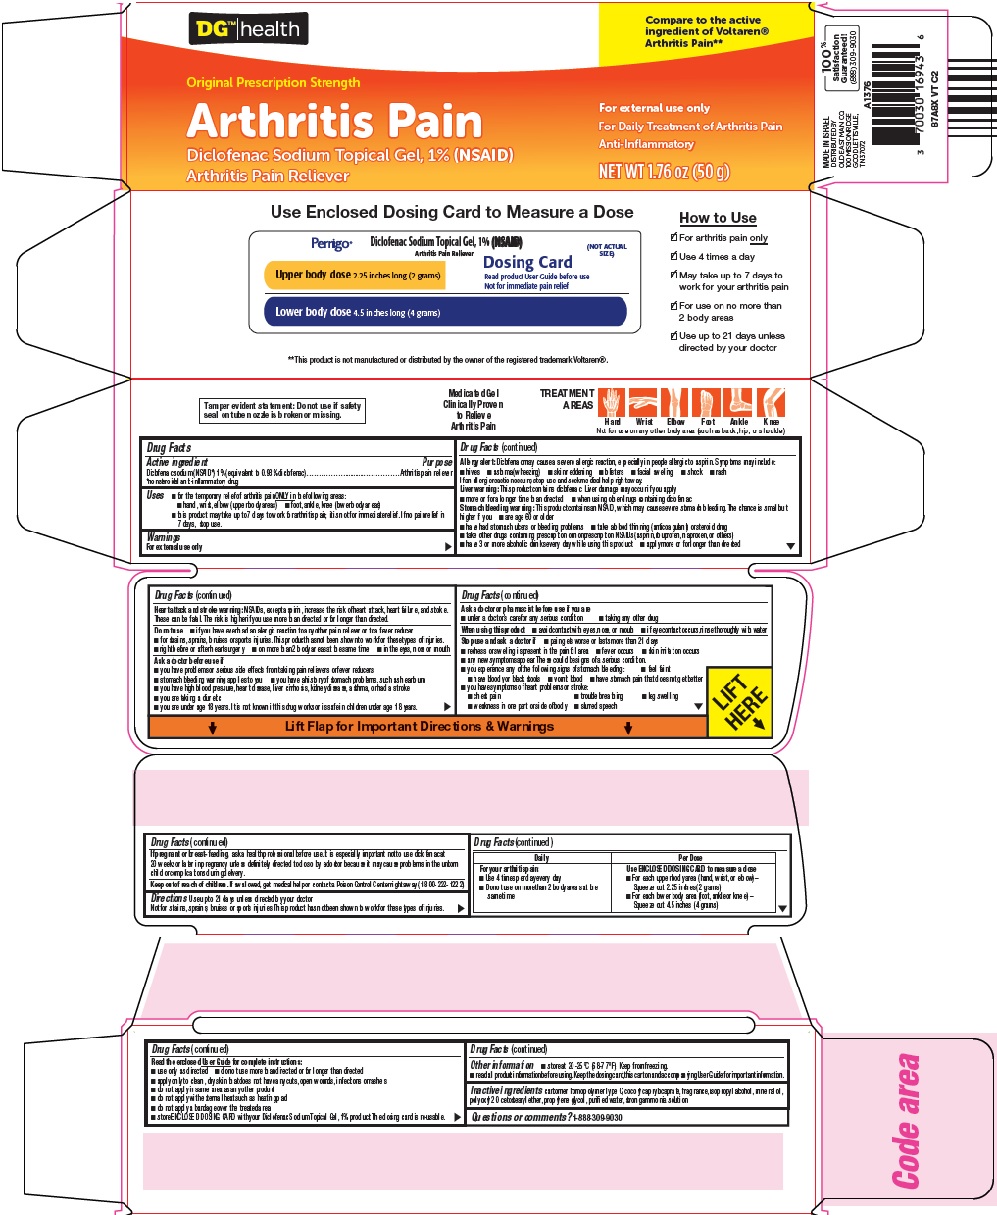 arthritis pain-image